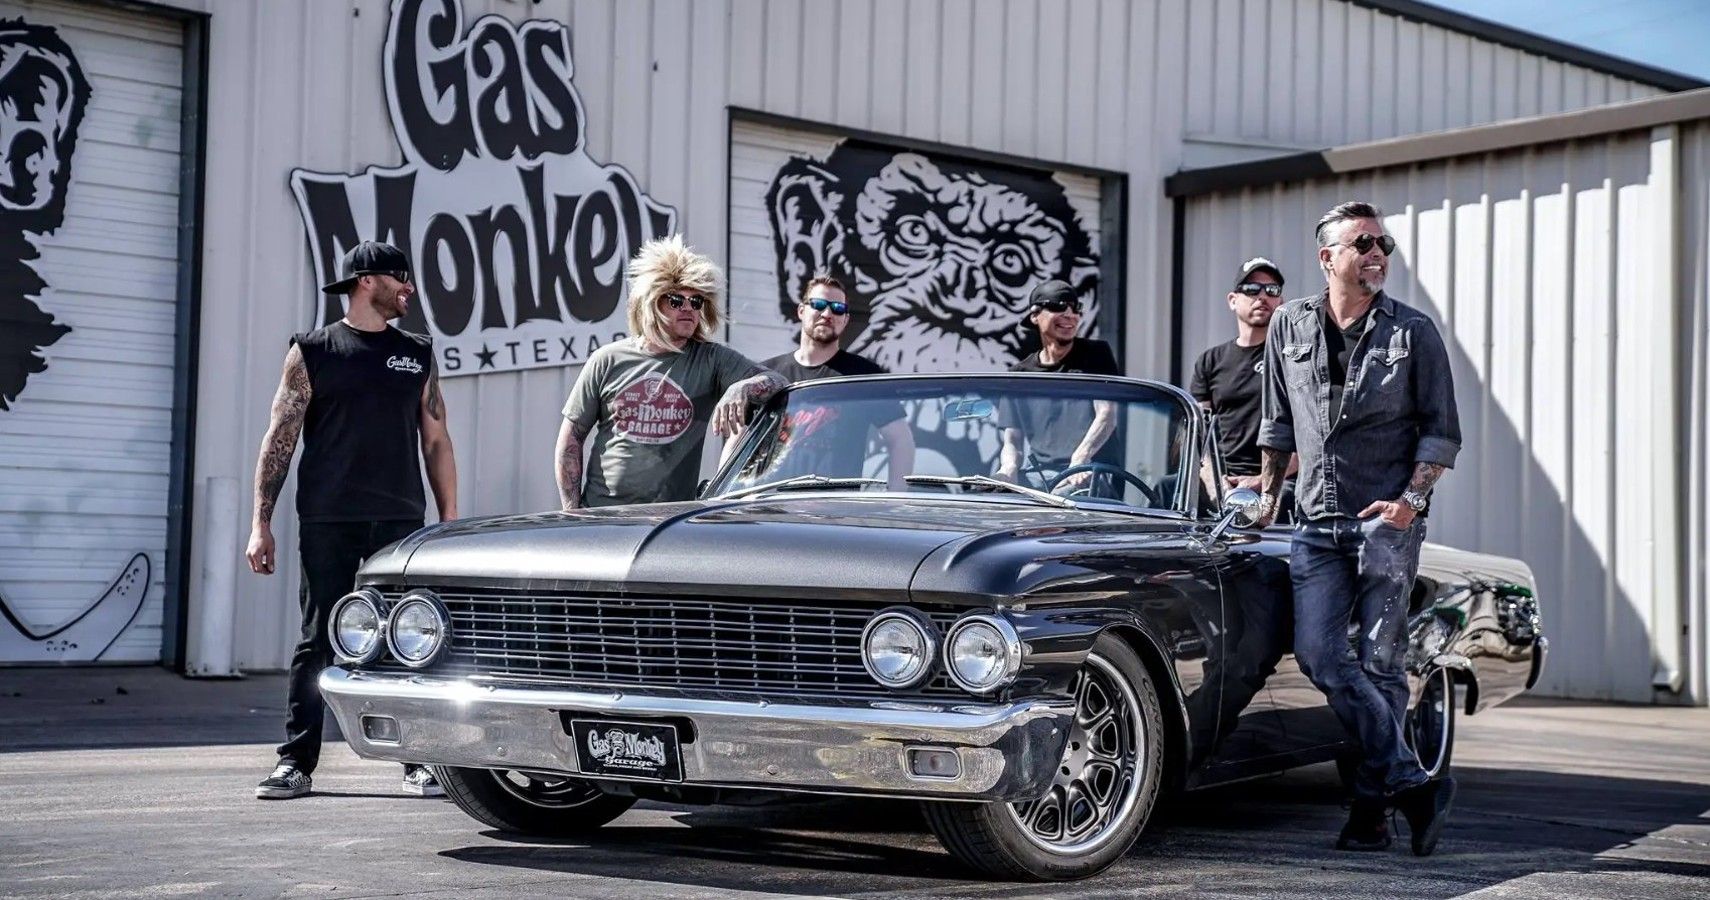 10 Coolest Classic Cars Gas Monkey Garage Ever Built